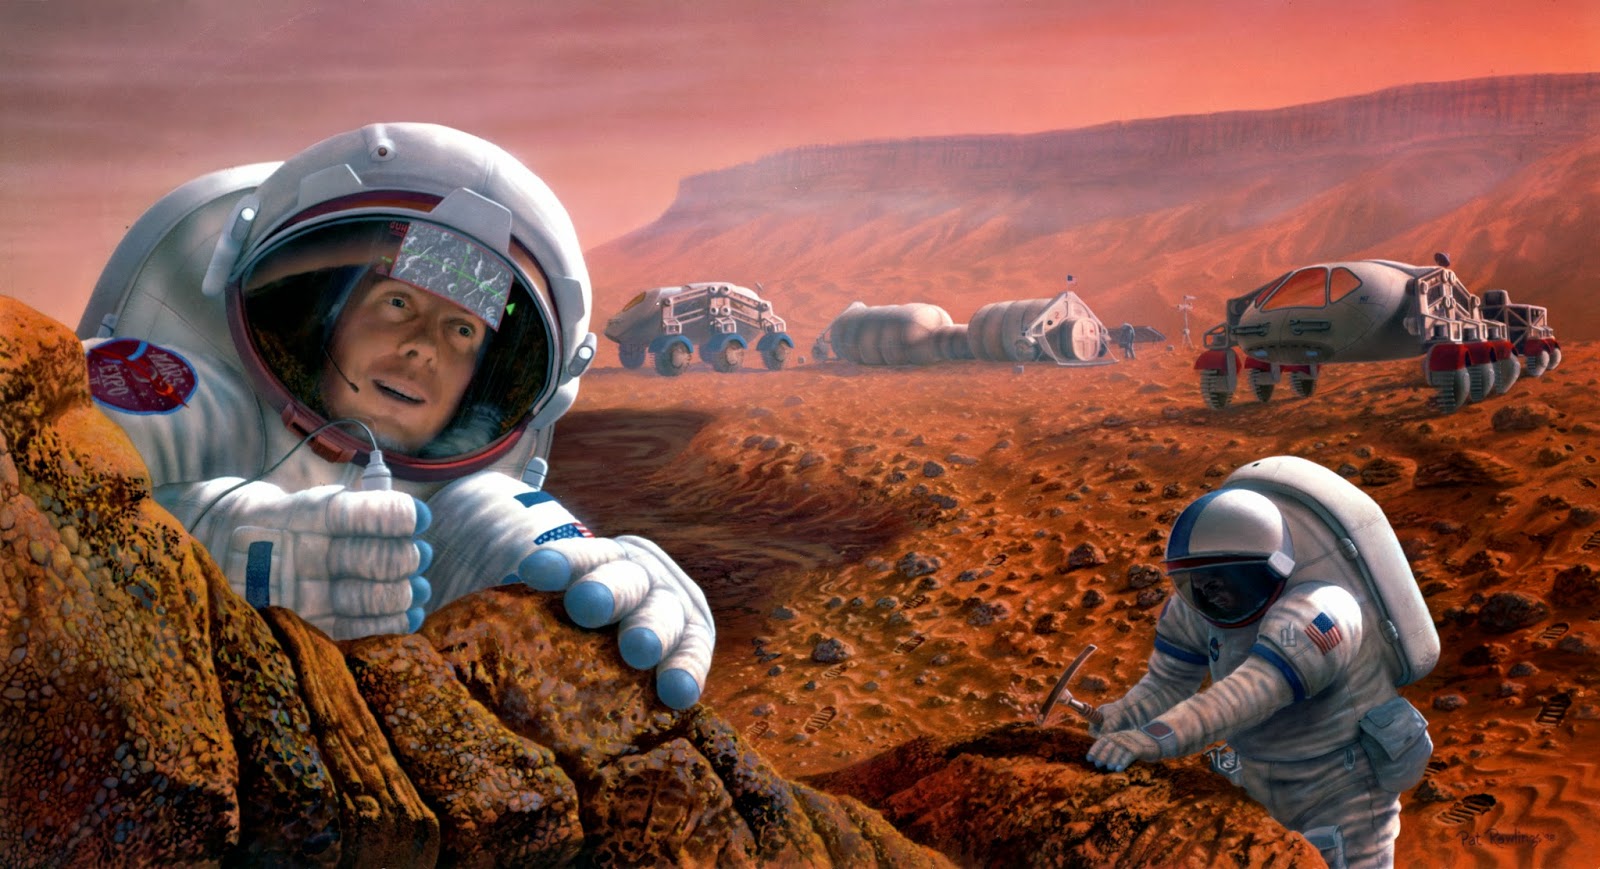 Mars base by Pat Rawlings